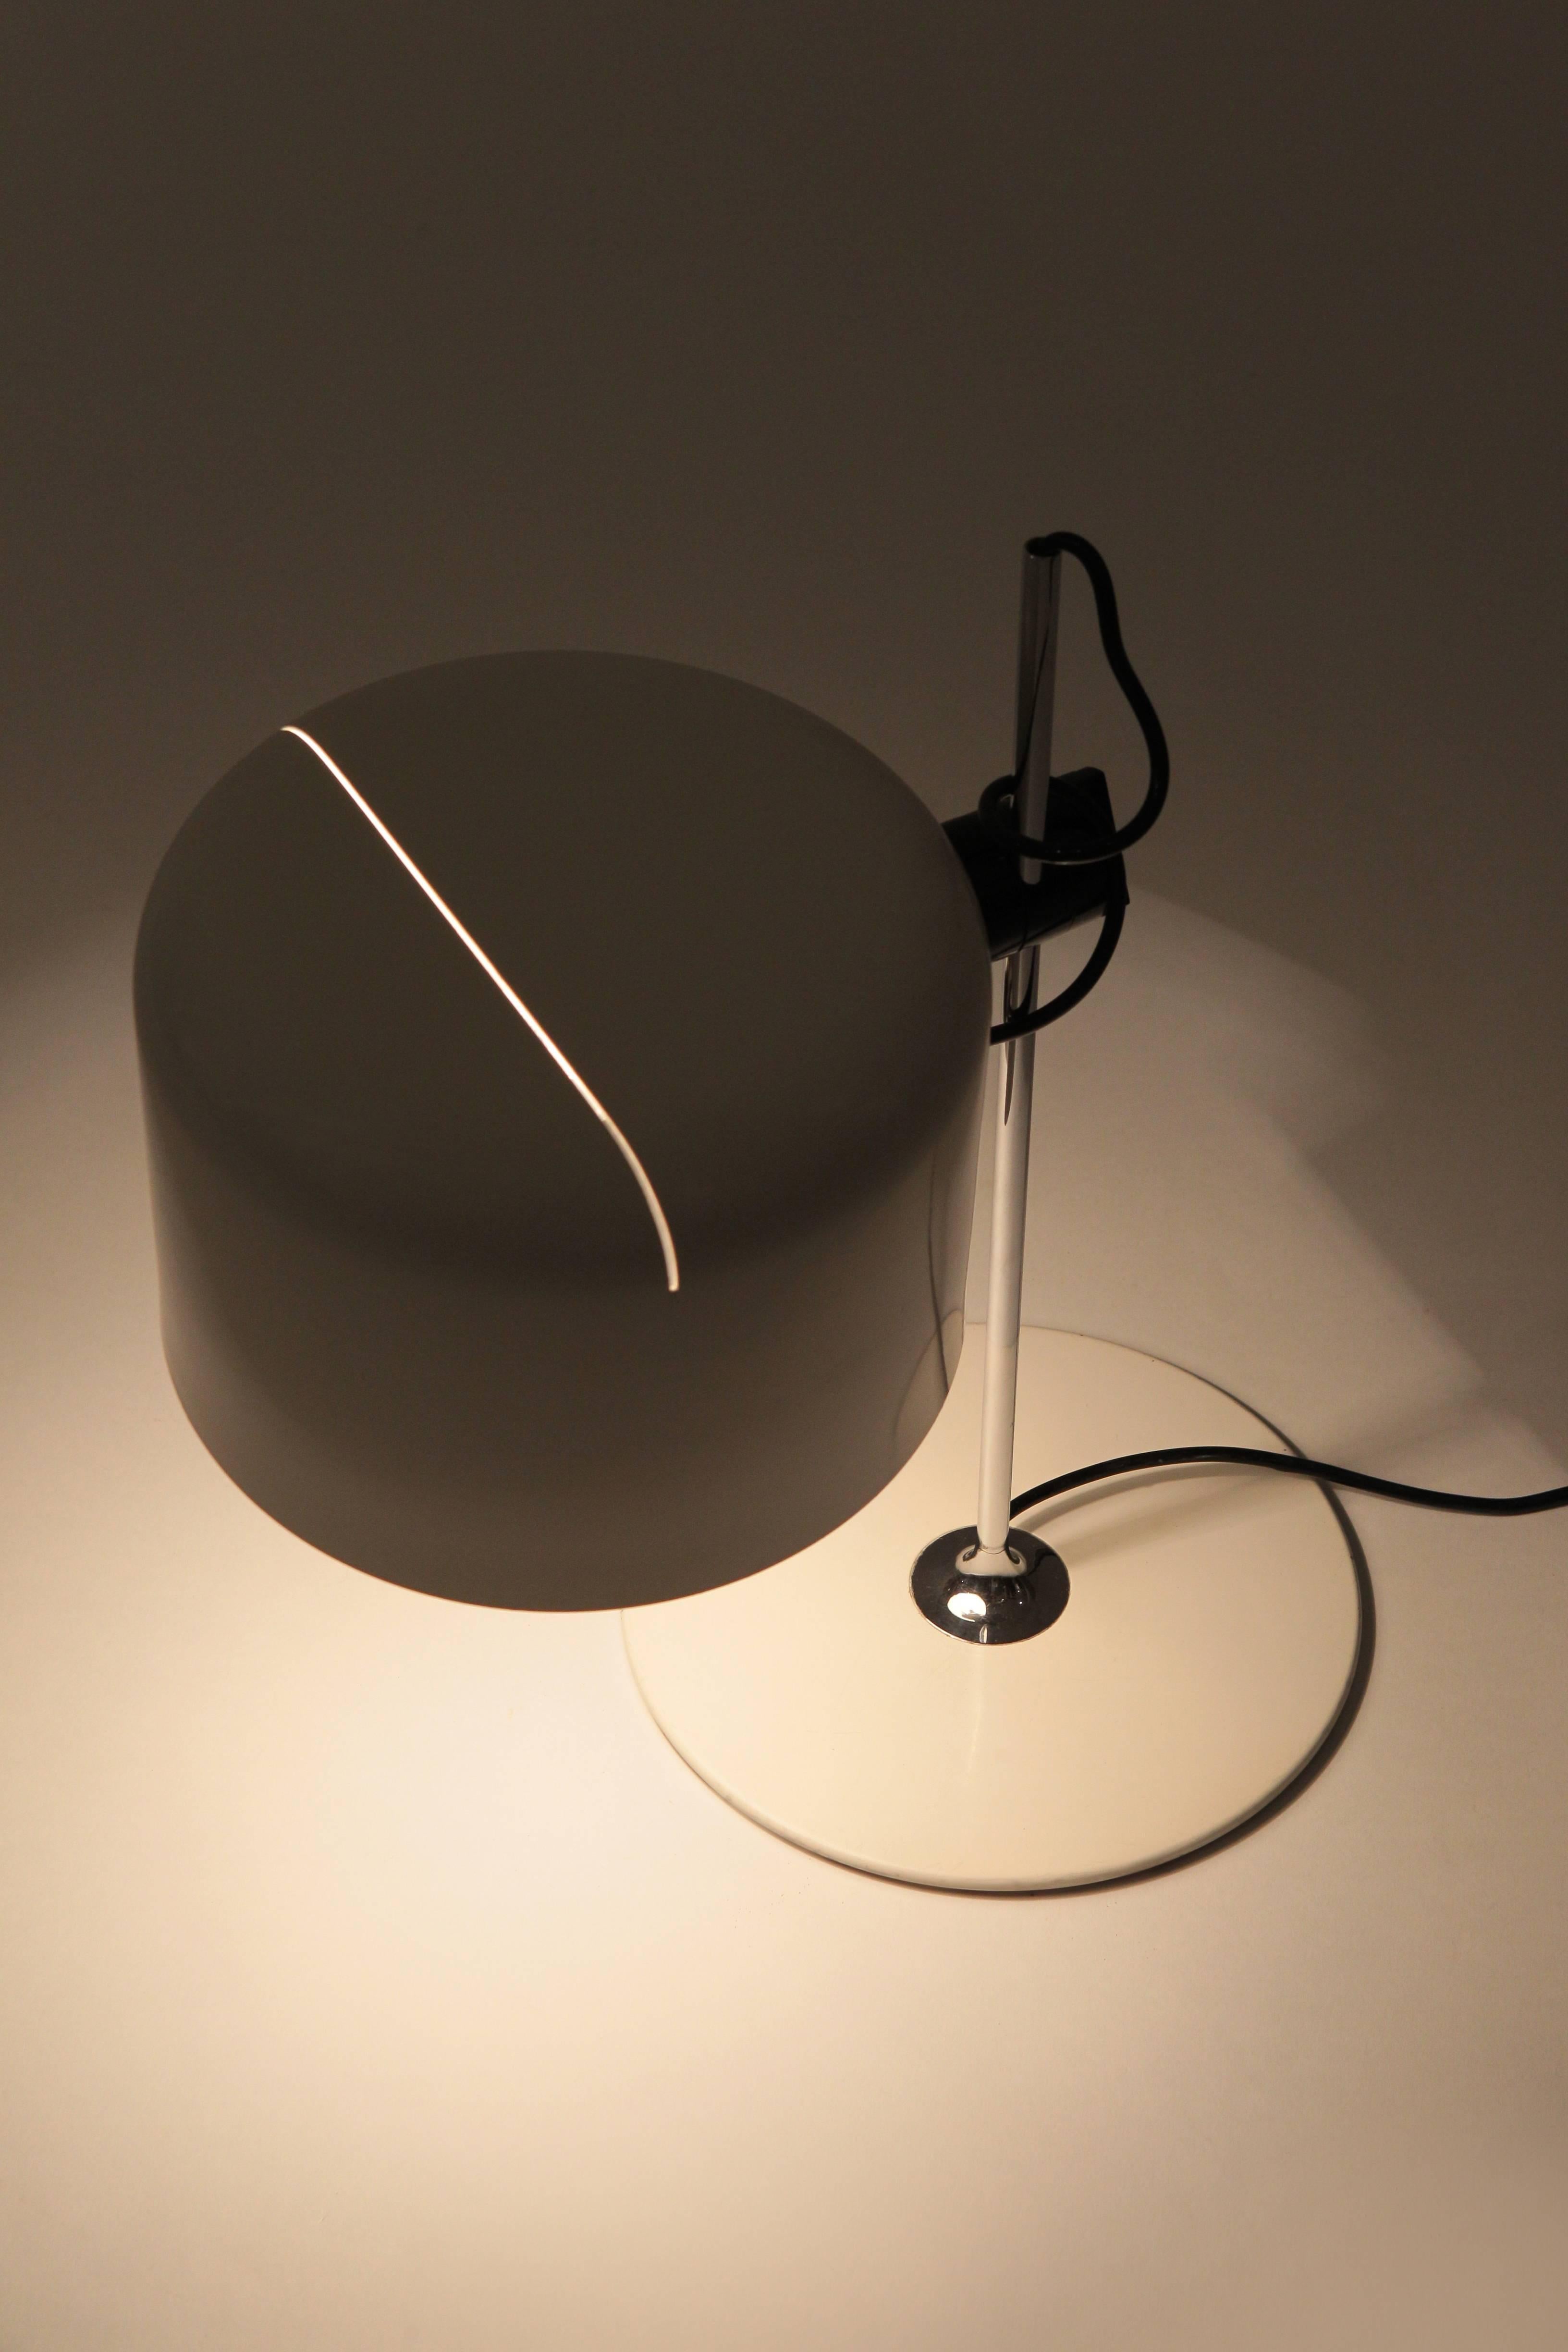 Joe Colombo “Coupe” Table Lamp O-Luce, 1960s For Sale 6